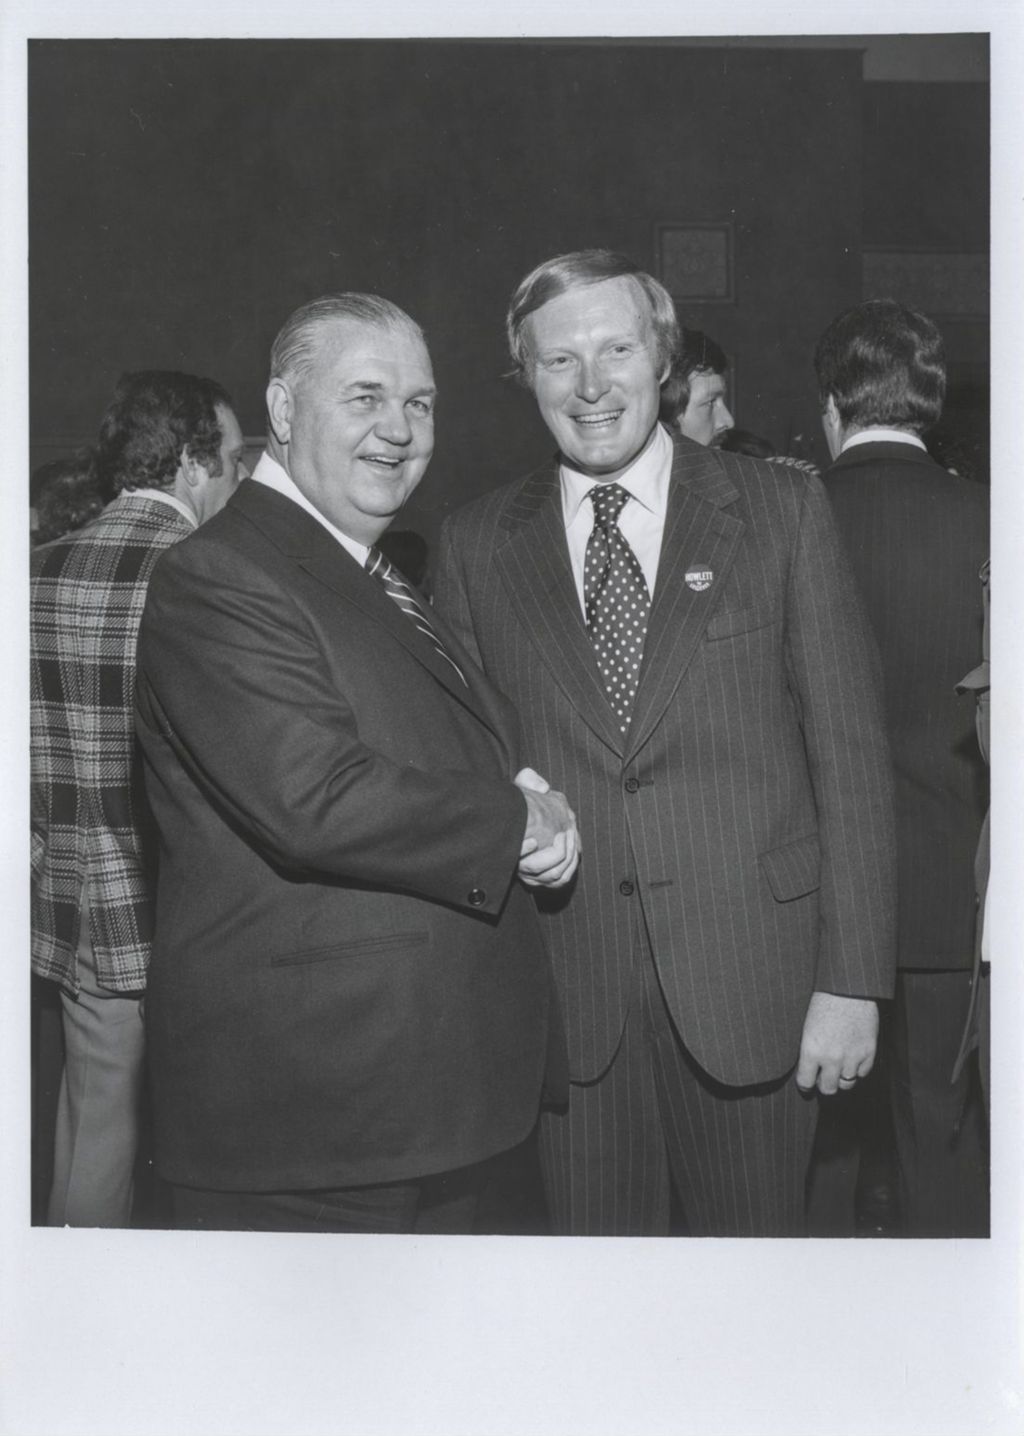 Michael J. Howlett and Lt. Governor Neil Hartigan shaking hands